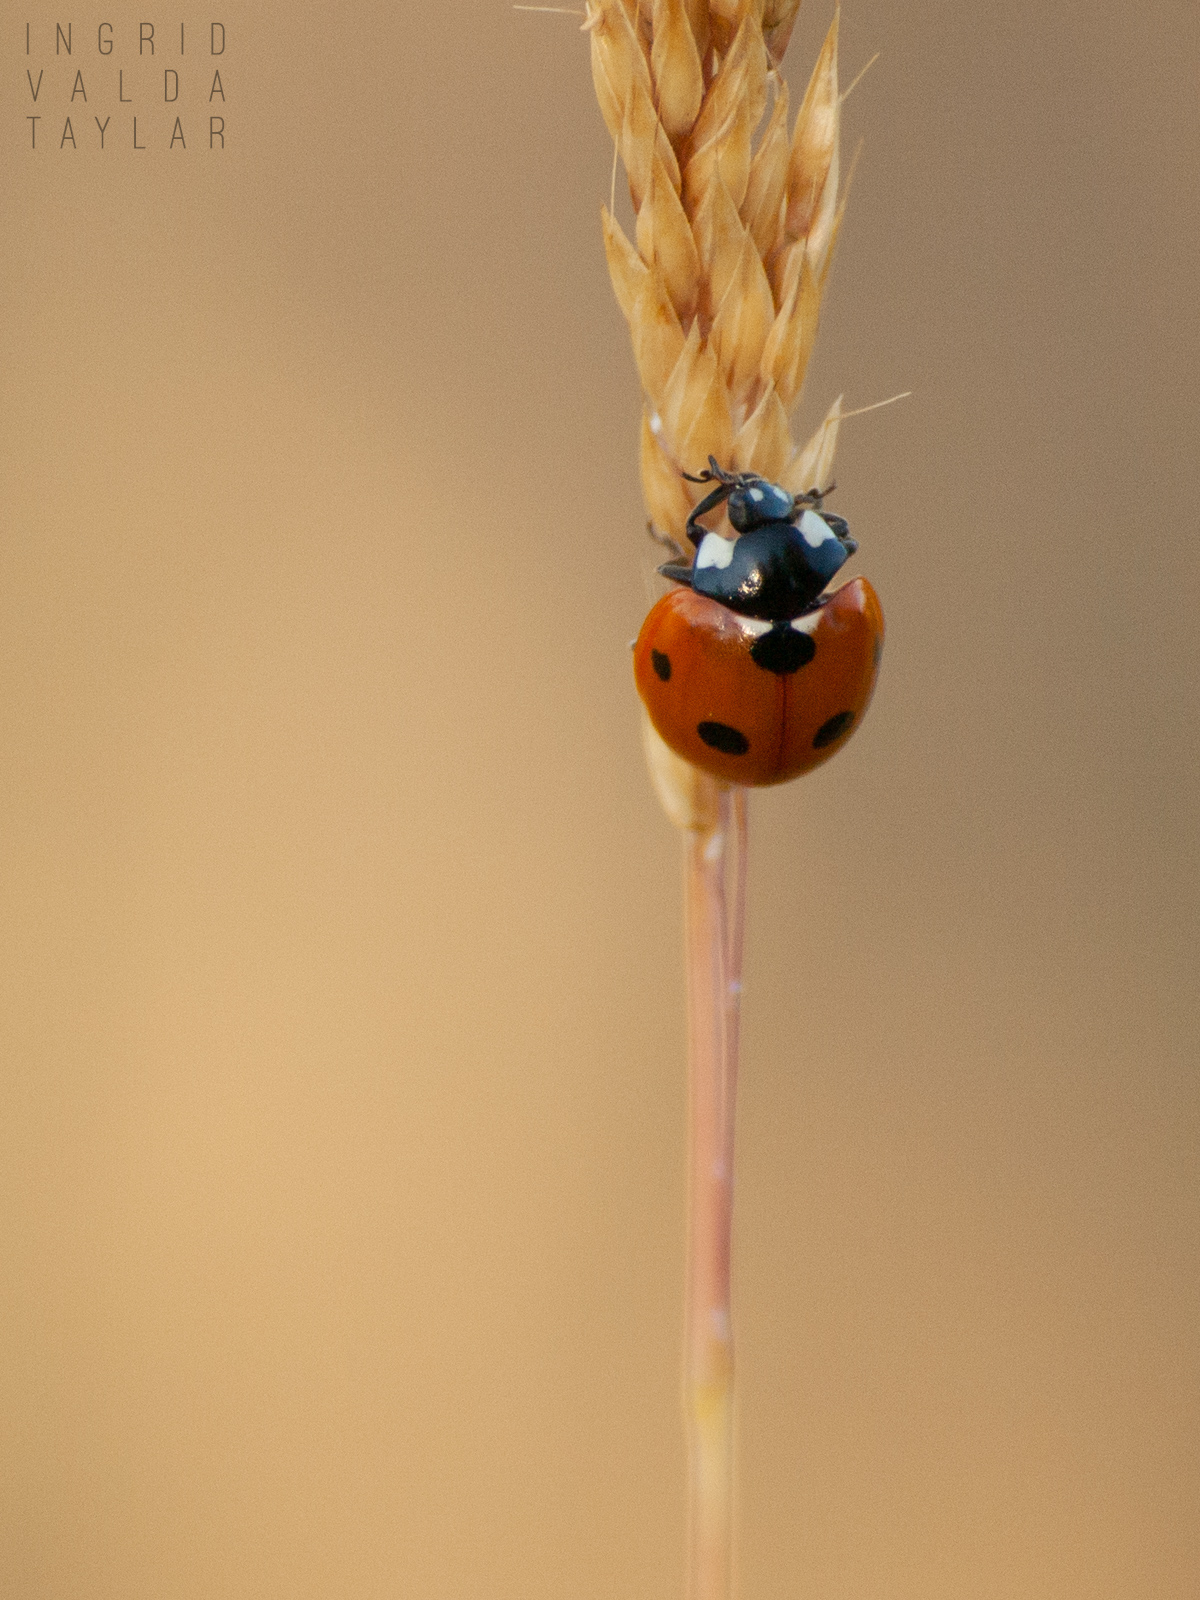 Ladybug on Grass Stalk